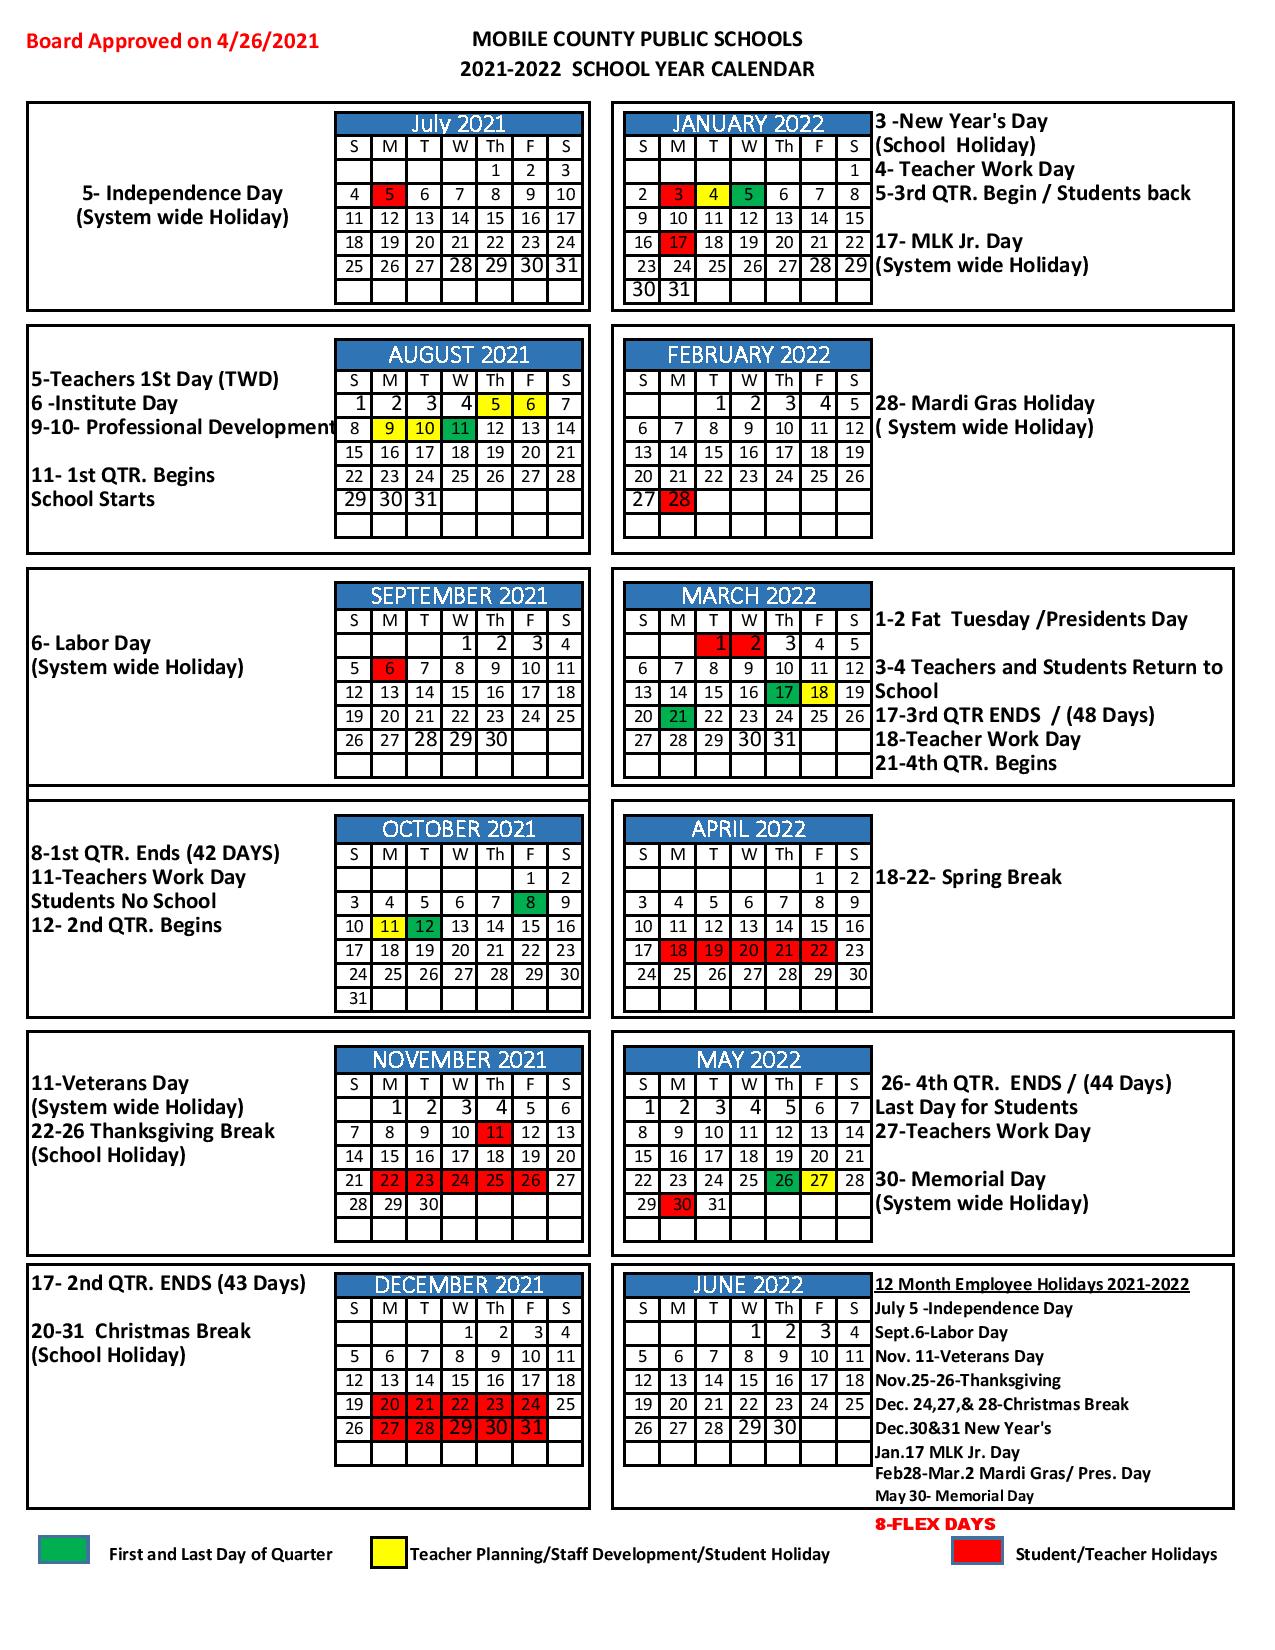 Mobile County Public Schools Calendar 2021 2022